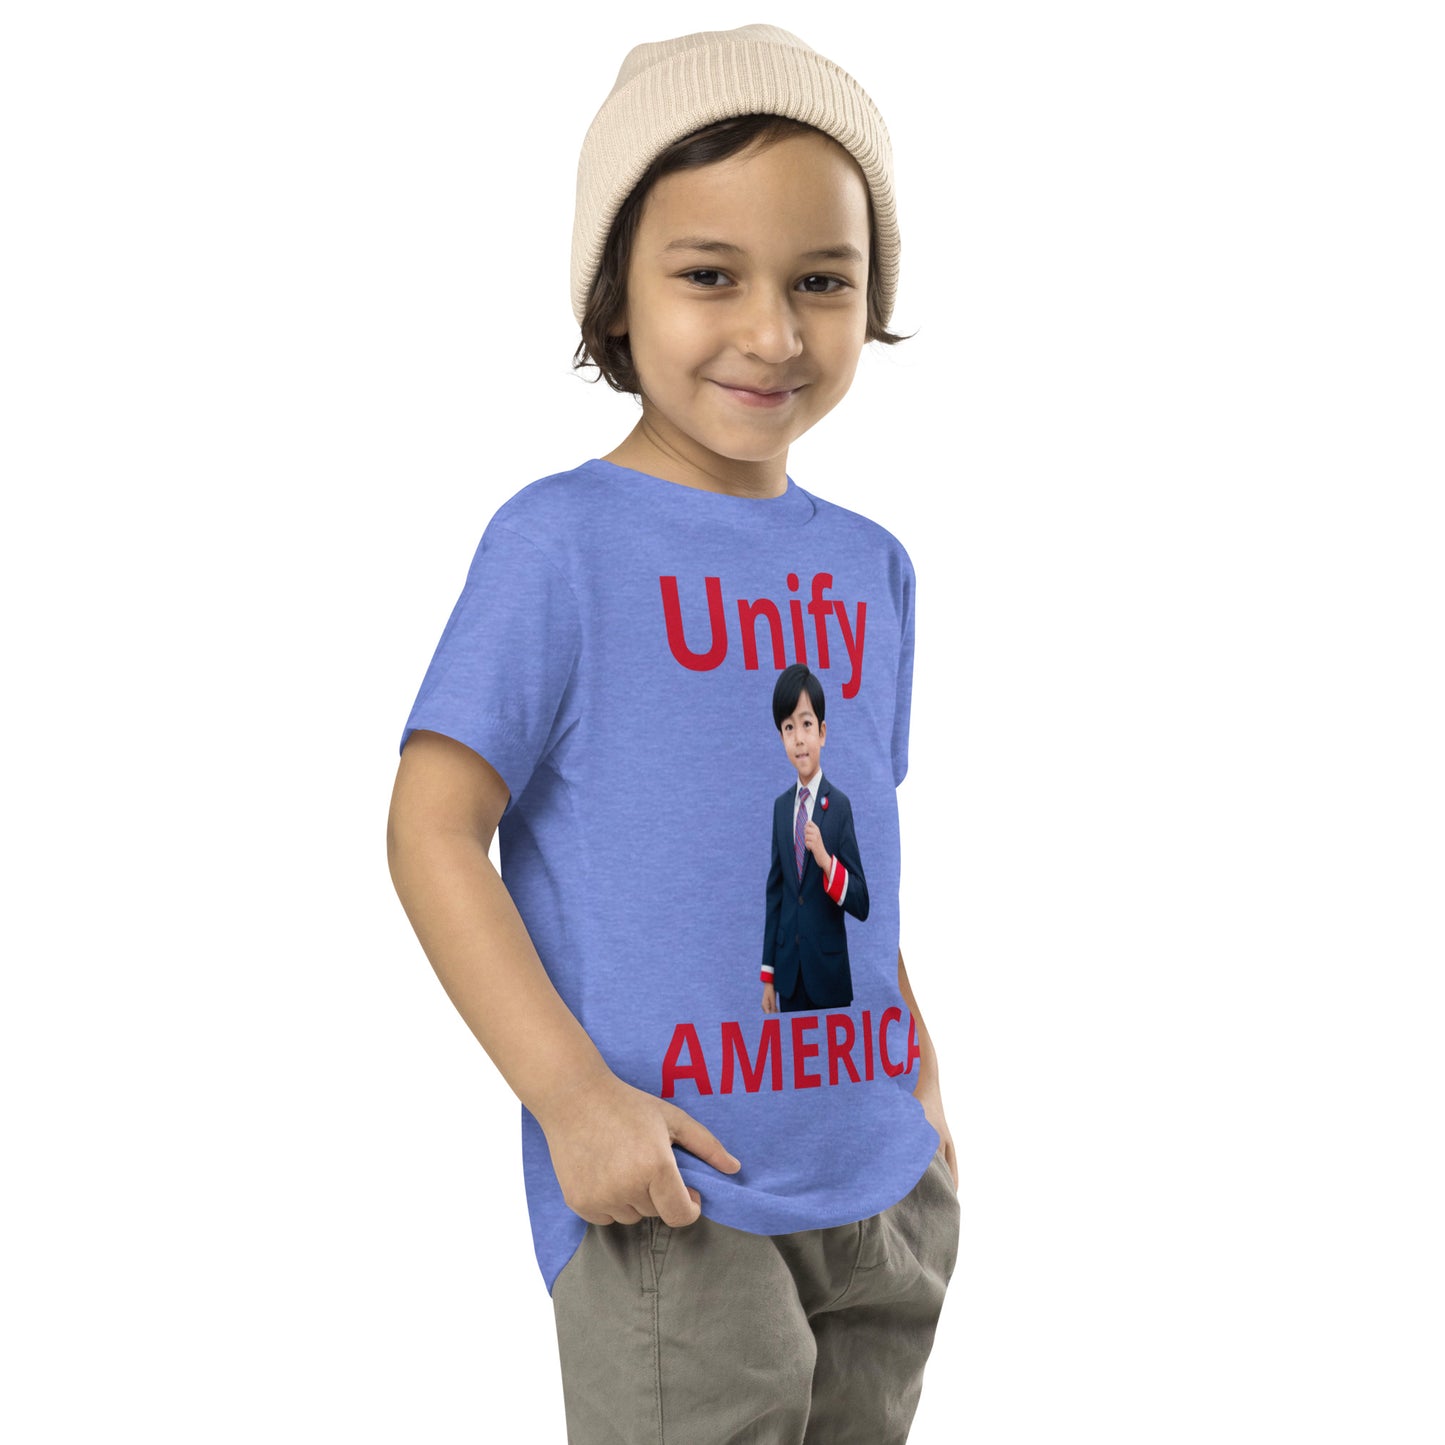 Unify America Asian Toddler Unisex Tee